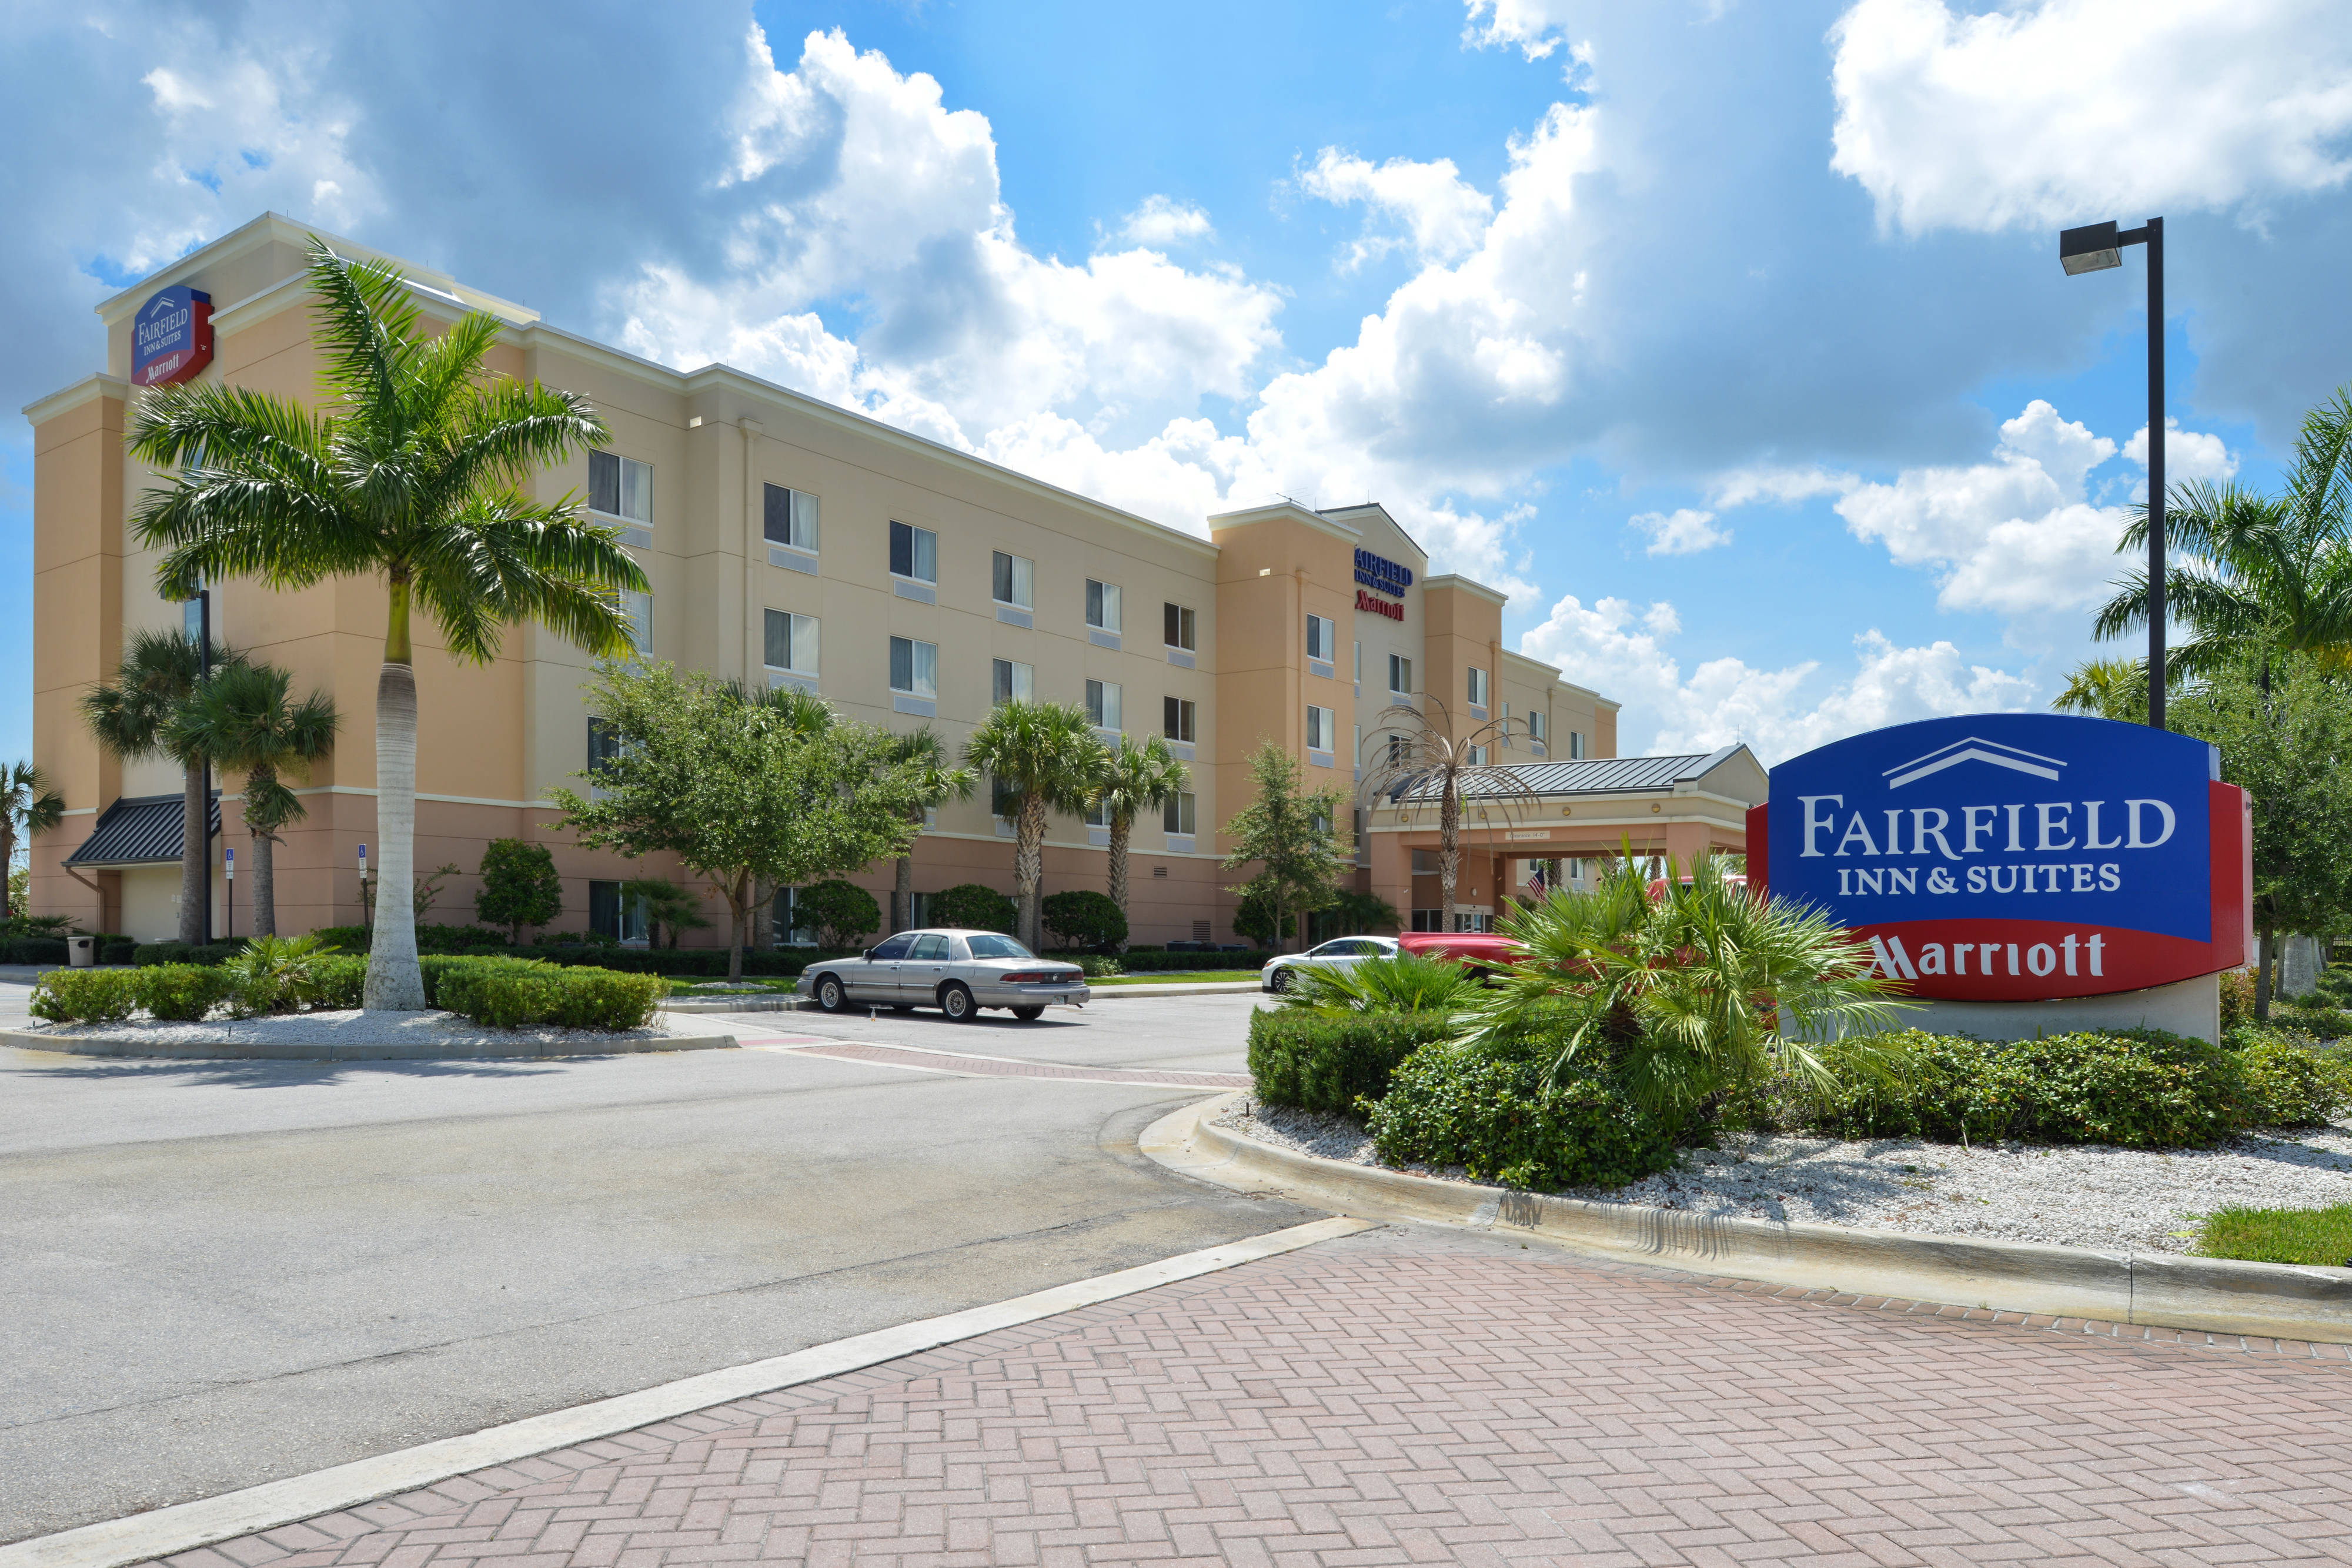 Photo of Fairfield Inn & Suites Fort Pierce, Fort Pierce, FL